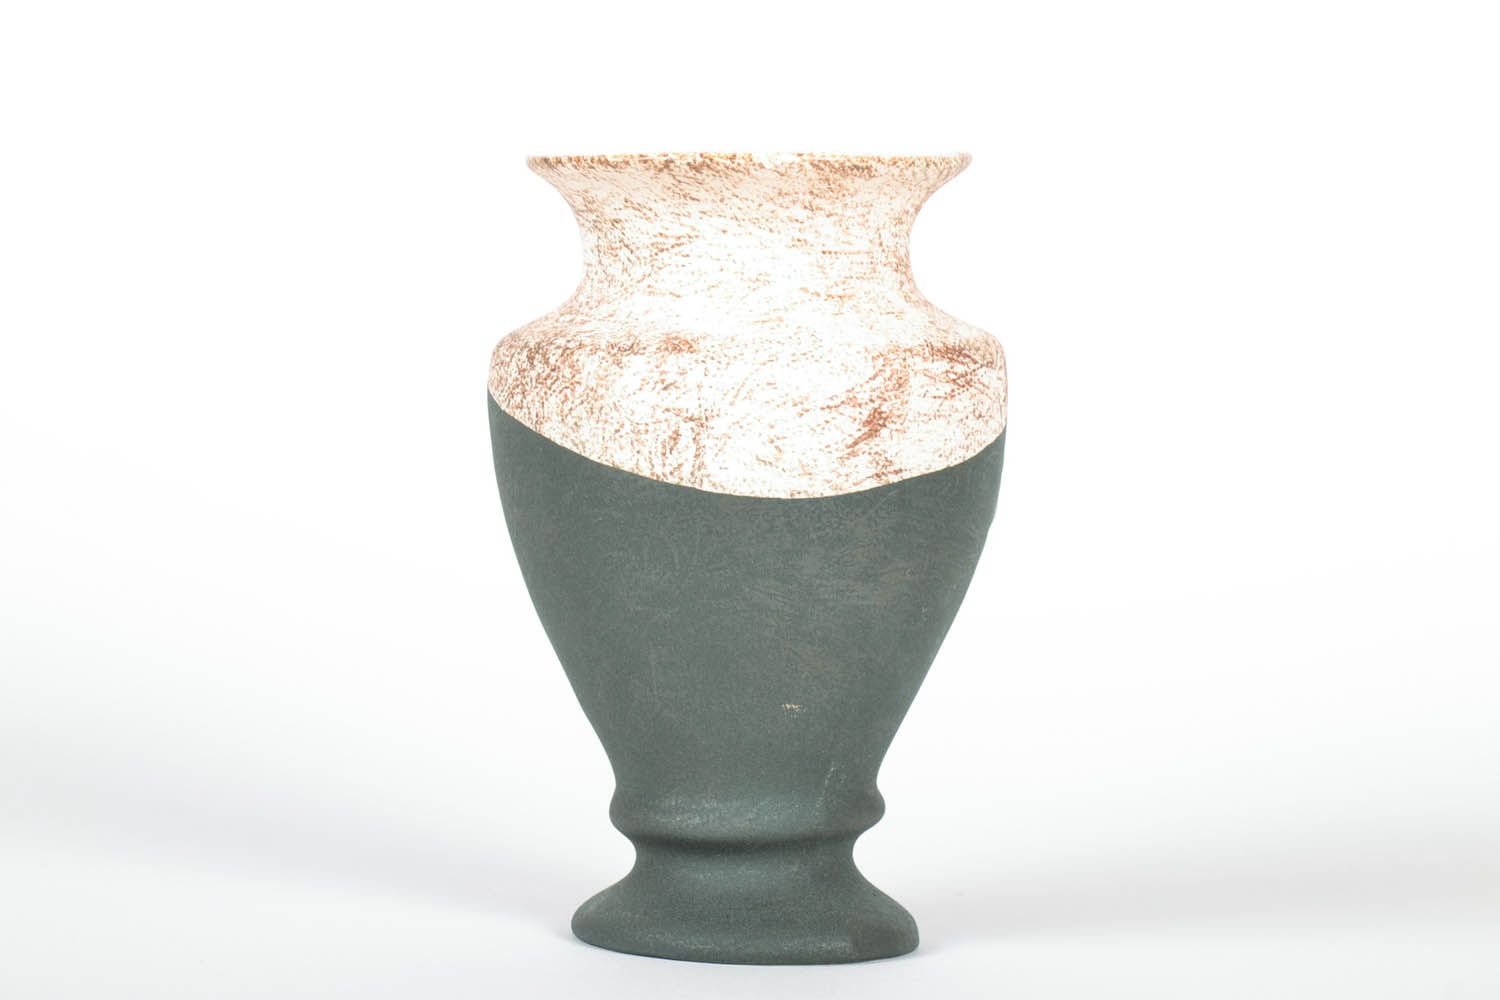 Vase 6-inch tall ceramic vase décor for flowers 0,87 lb photo 4